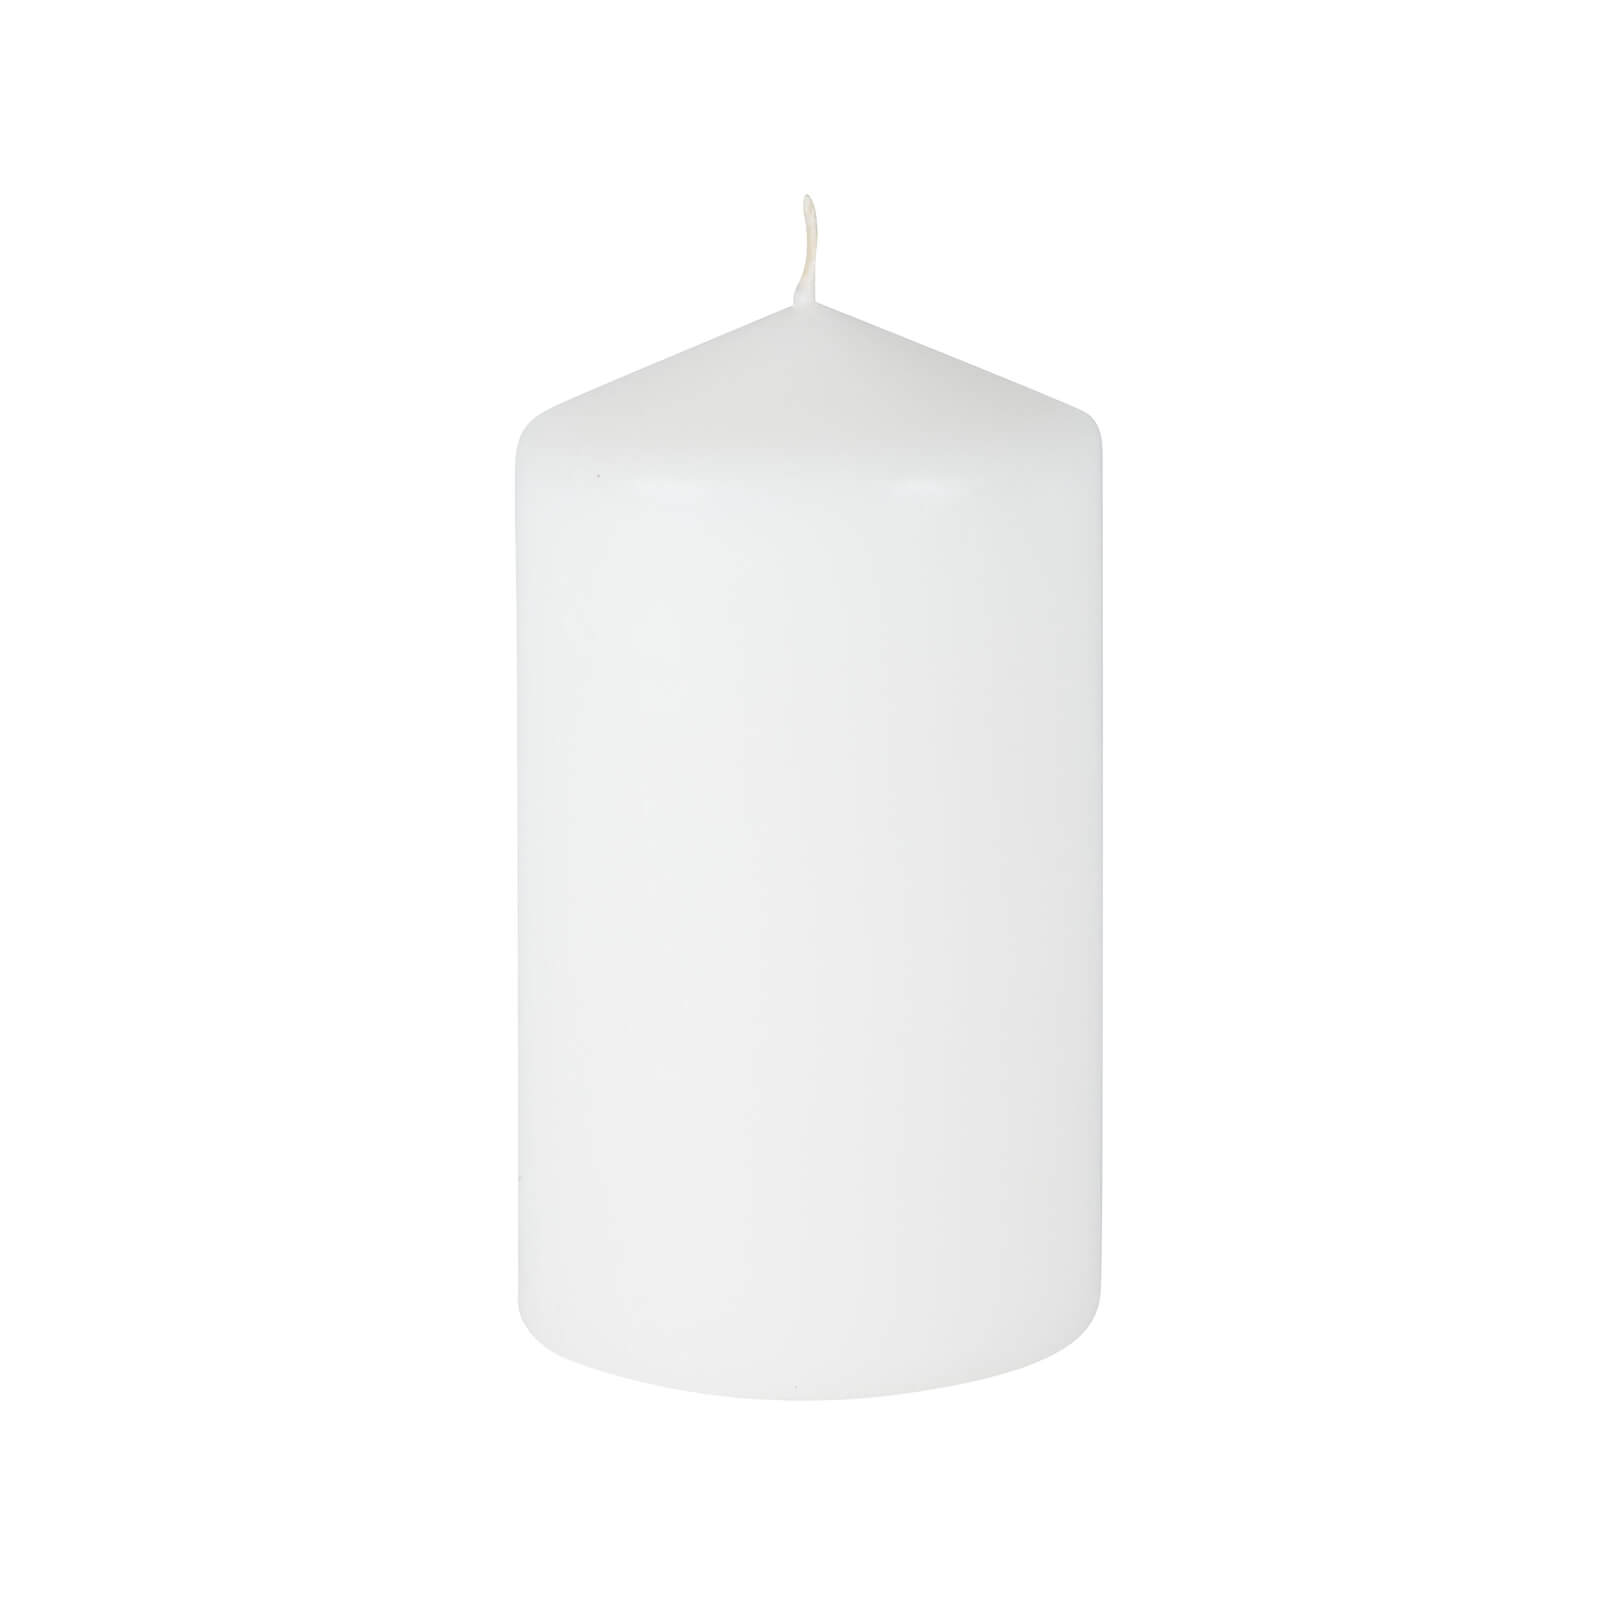 Photo of Medium Pillar Candle - White